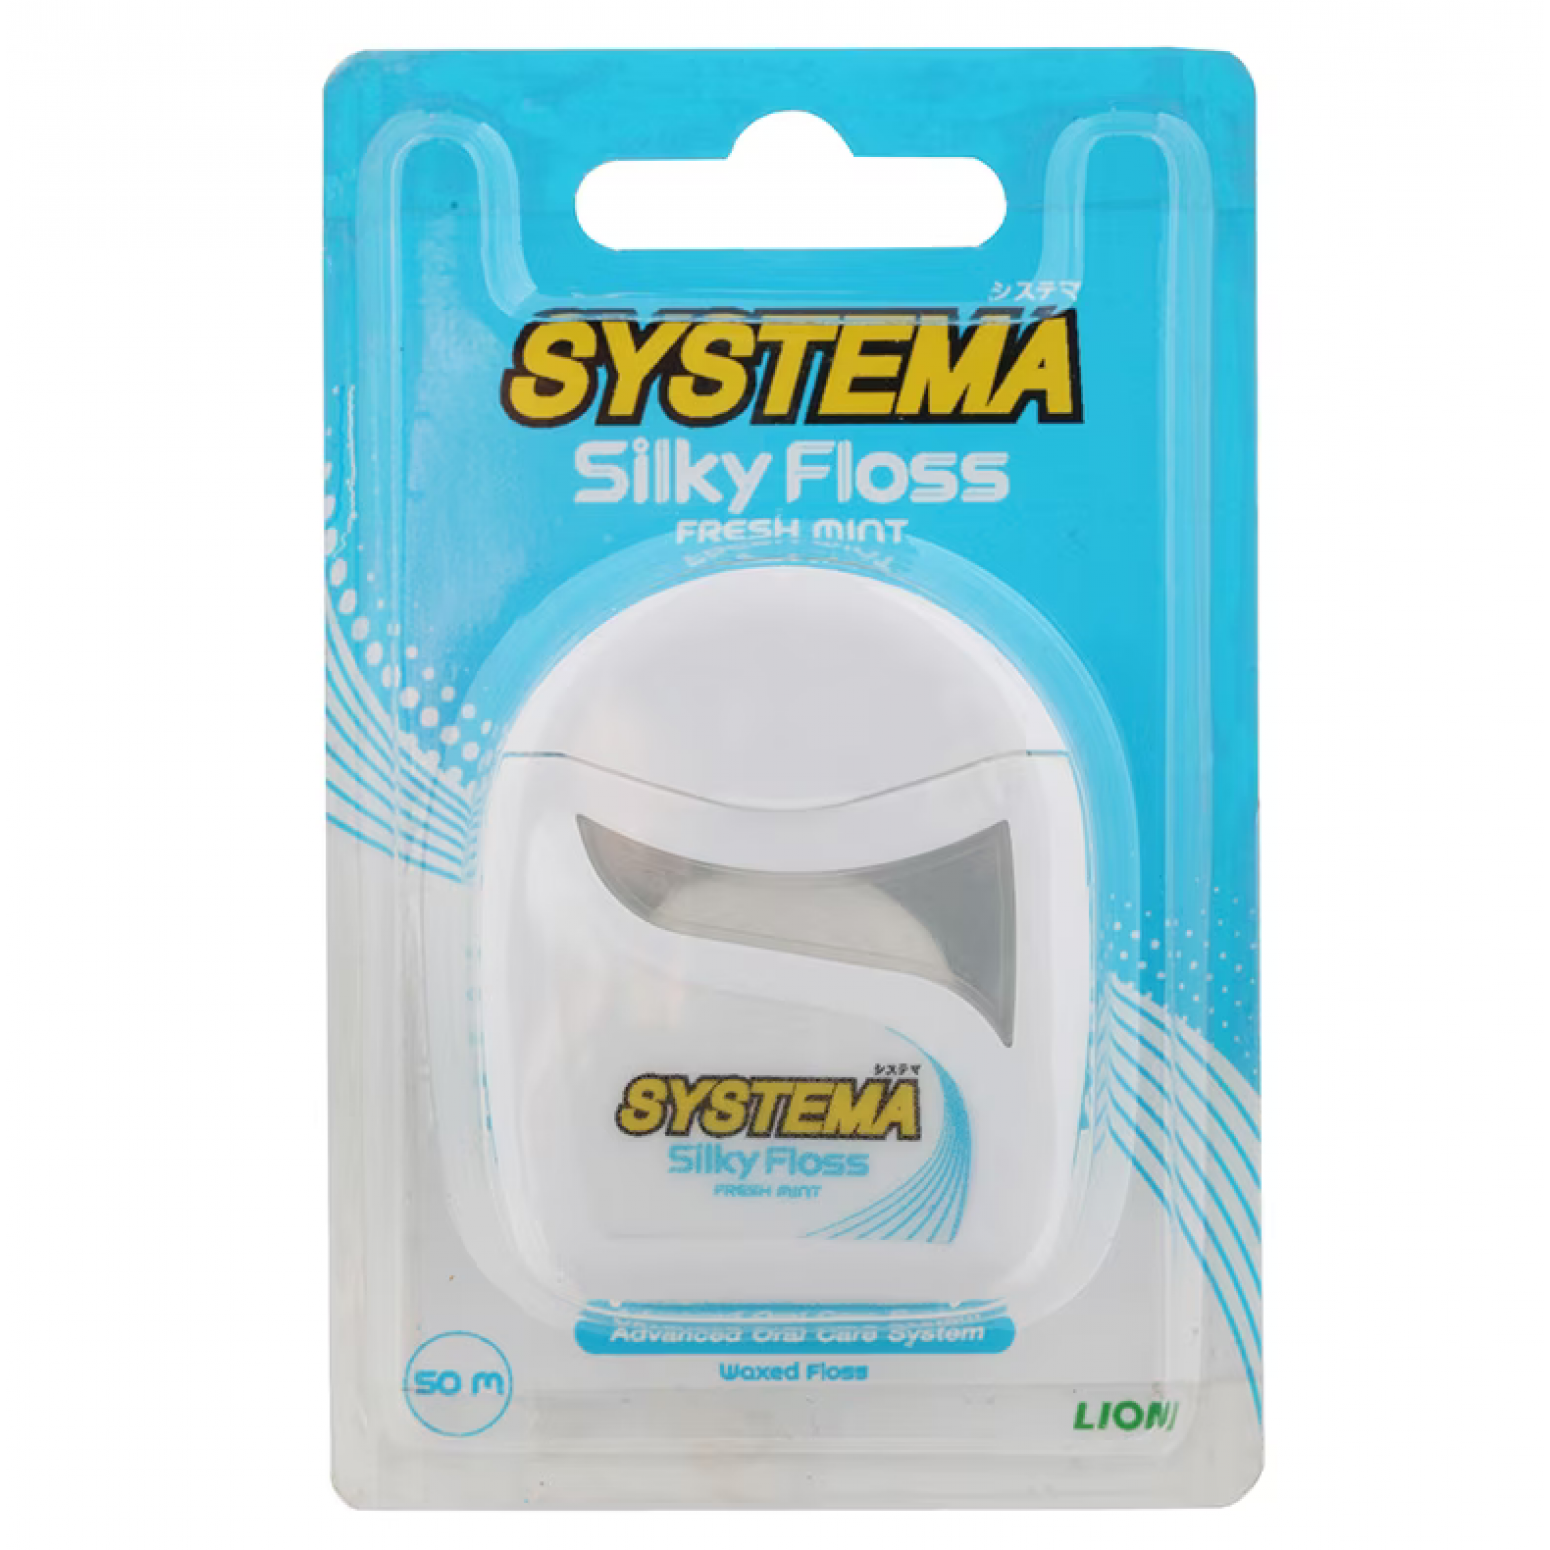 Systema Silky Floss Fresh Mint 50m.